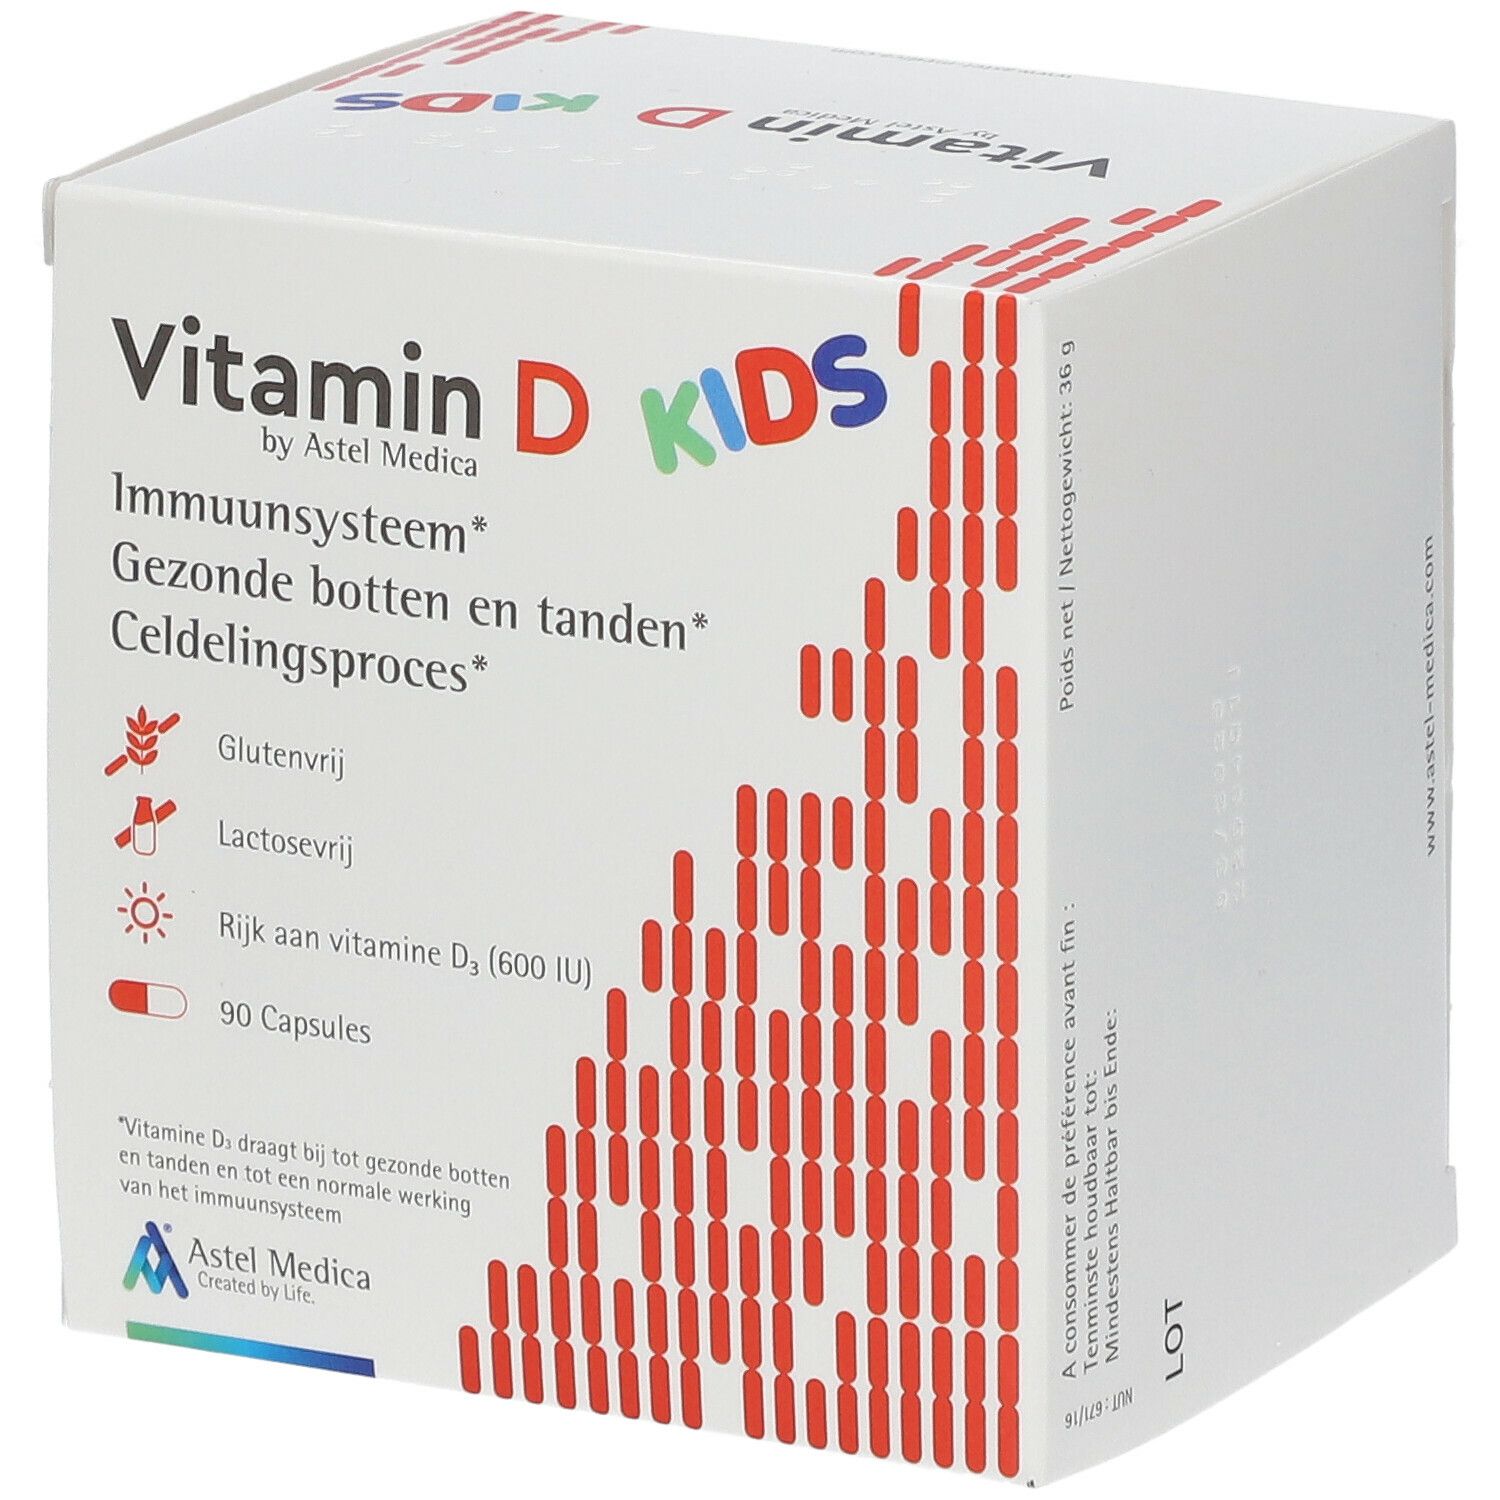 Astel Medica Vitamine D Kids